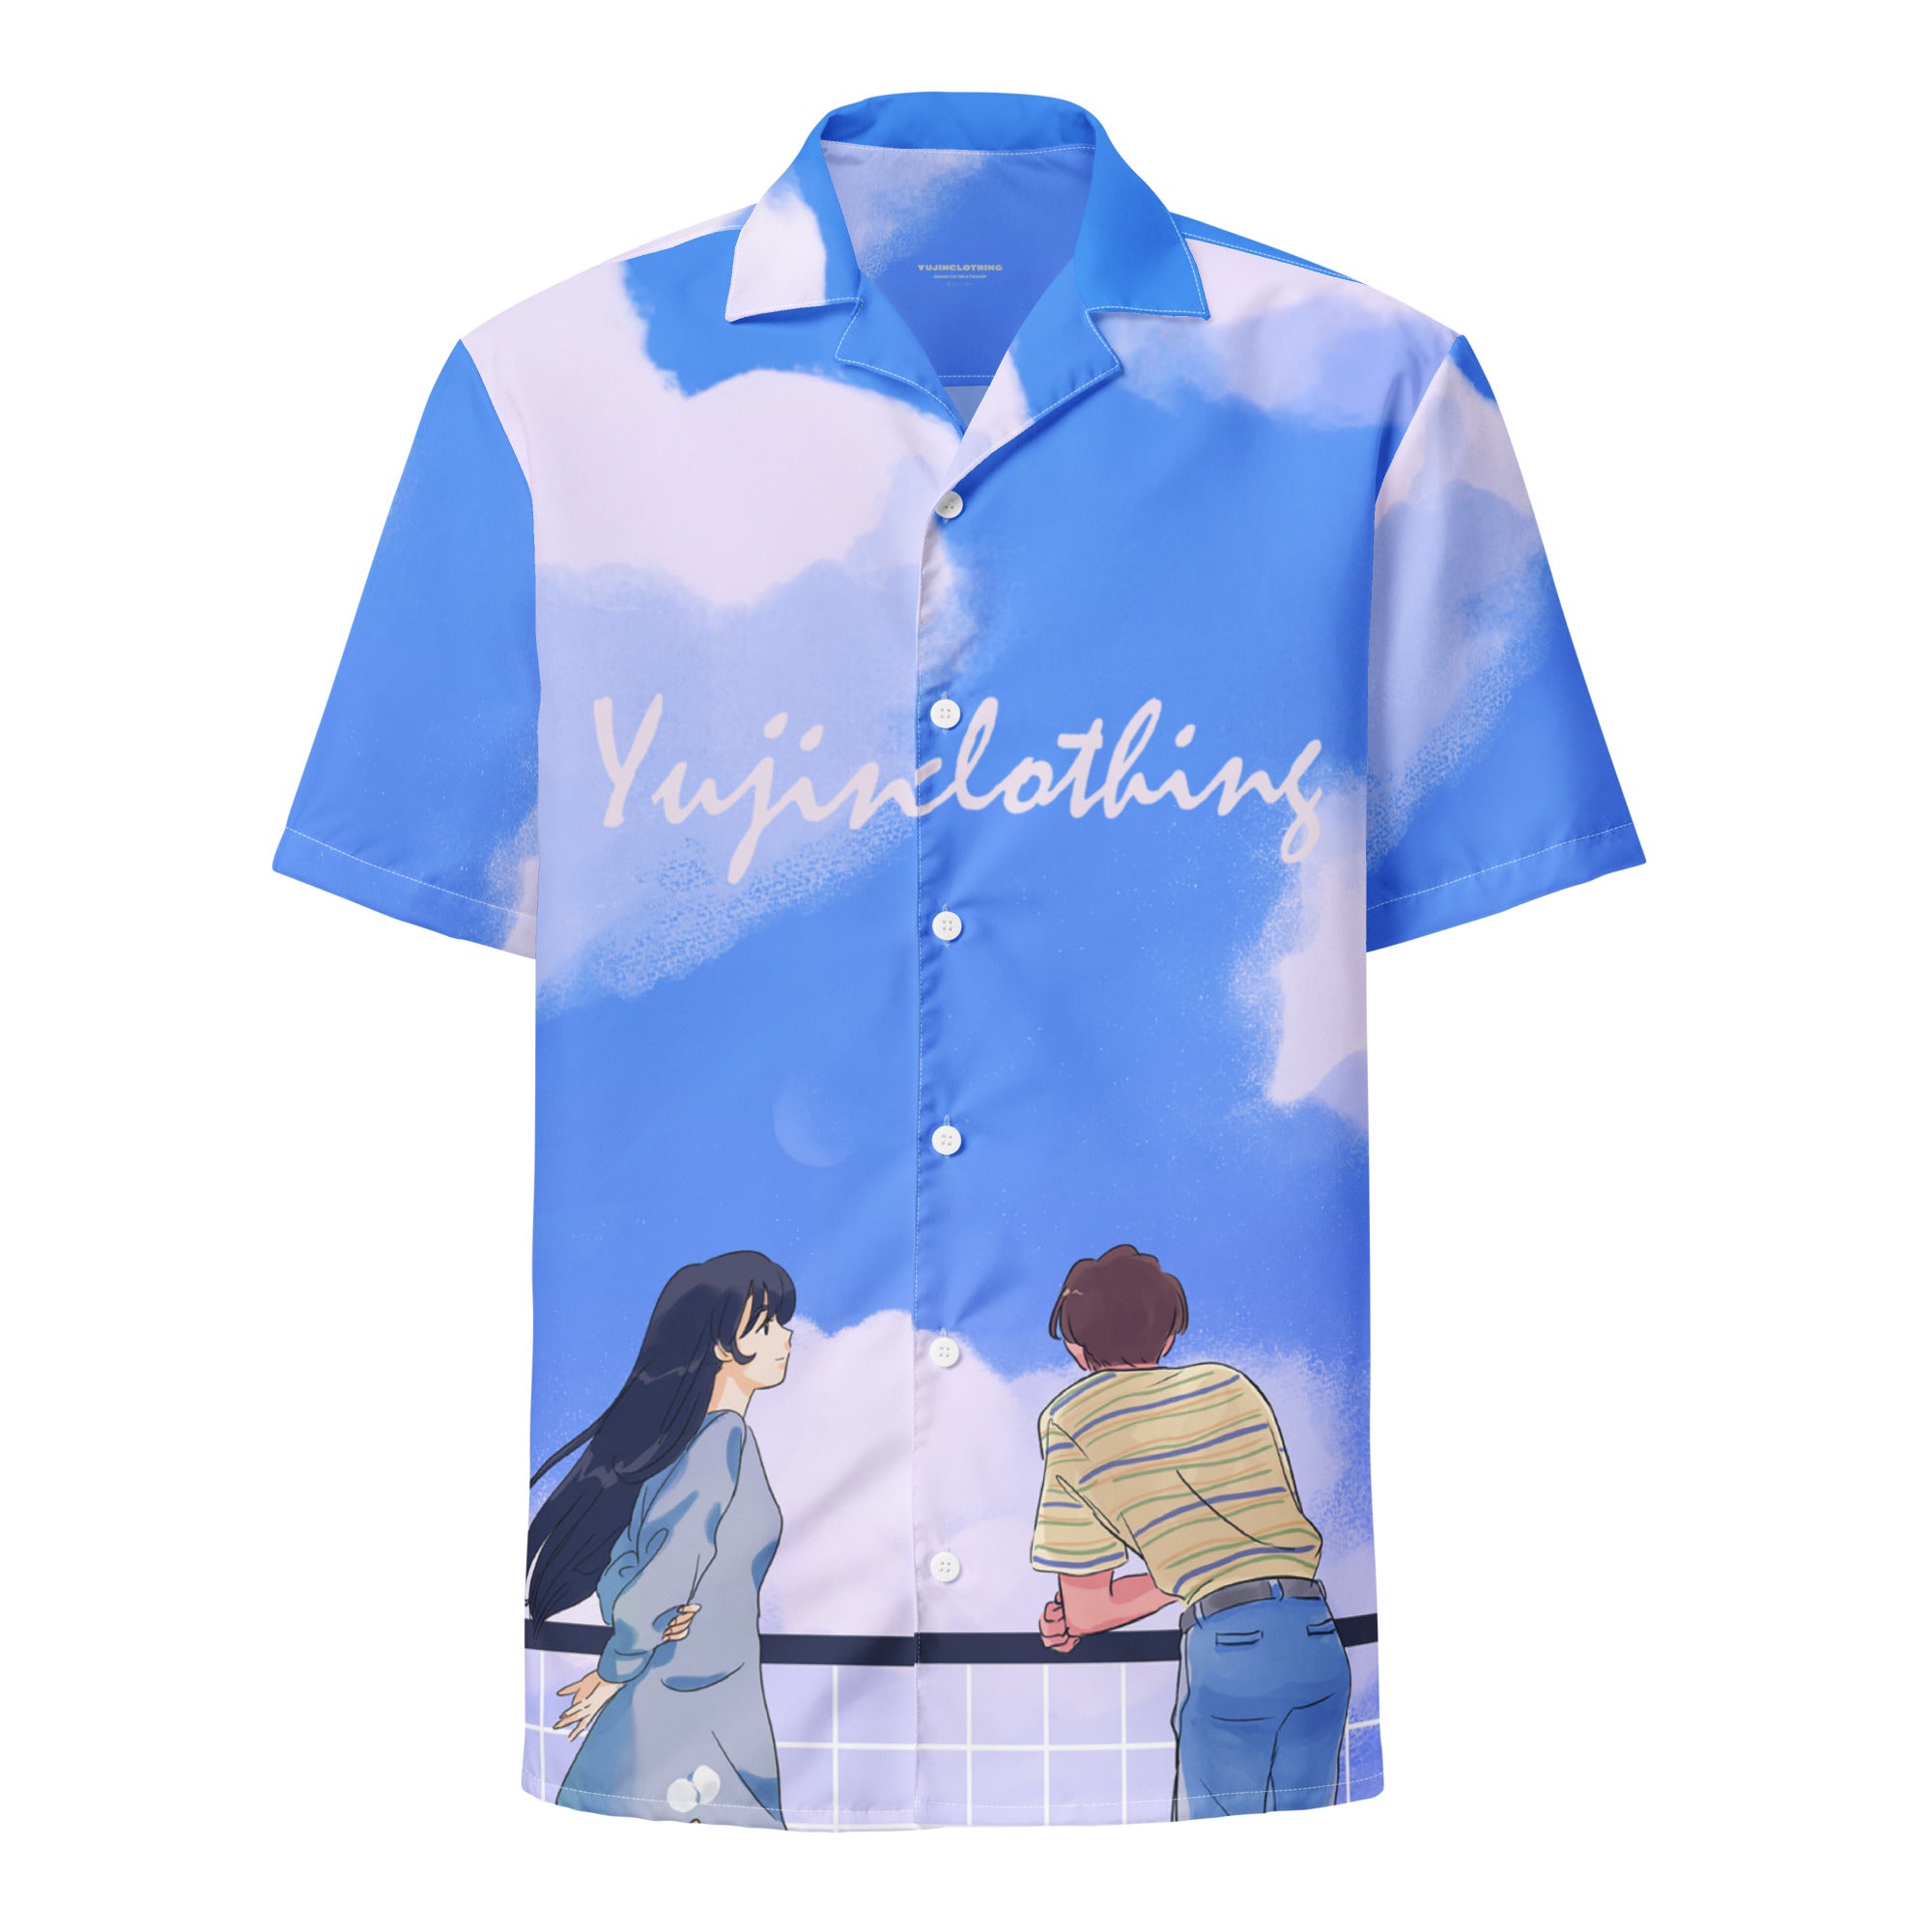 Baki Hanma Final Battle Shirt  Yūjin Japanese Anime Streetwear Clothing –  Yūjin Clothing